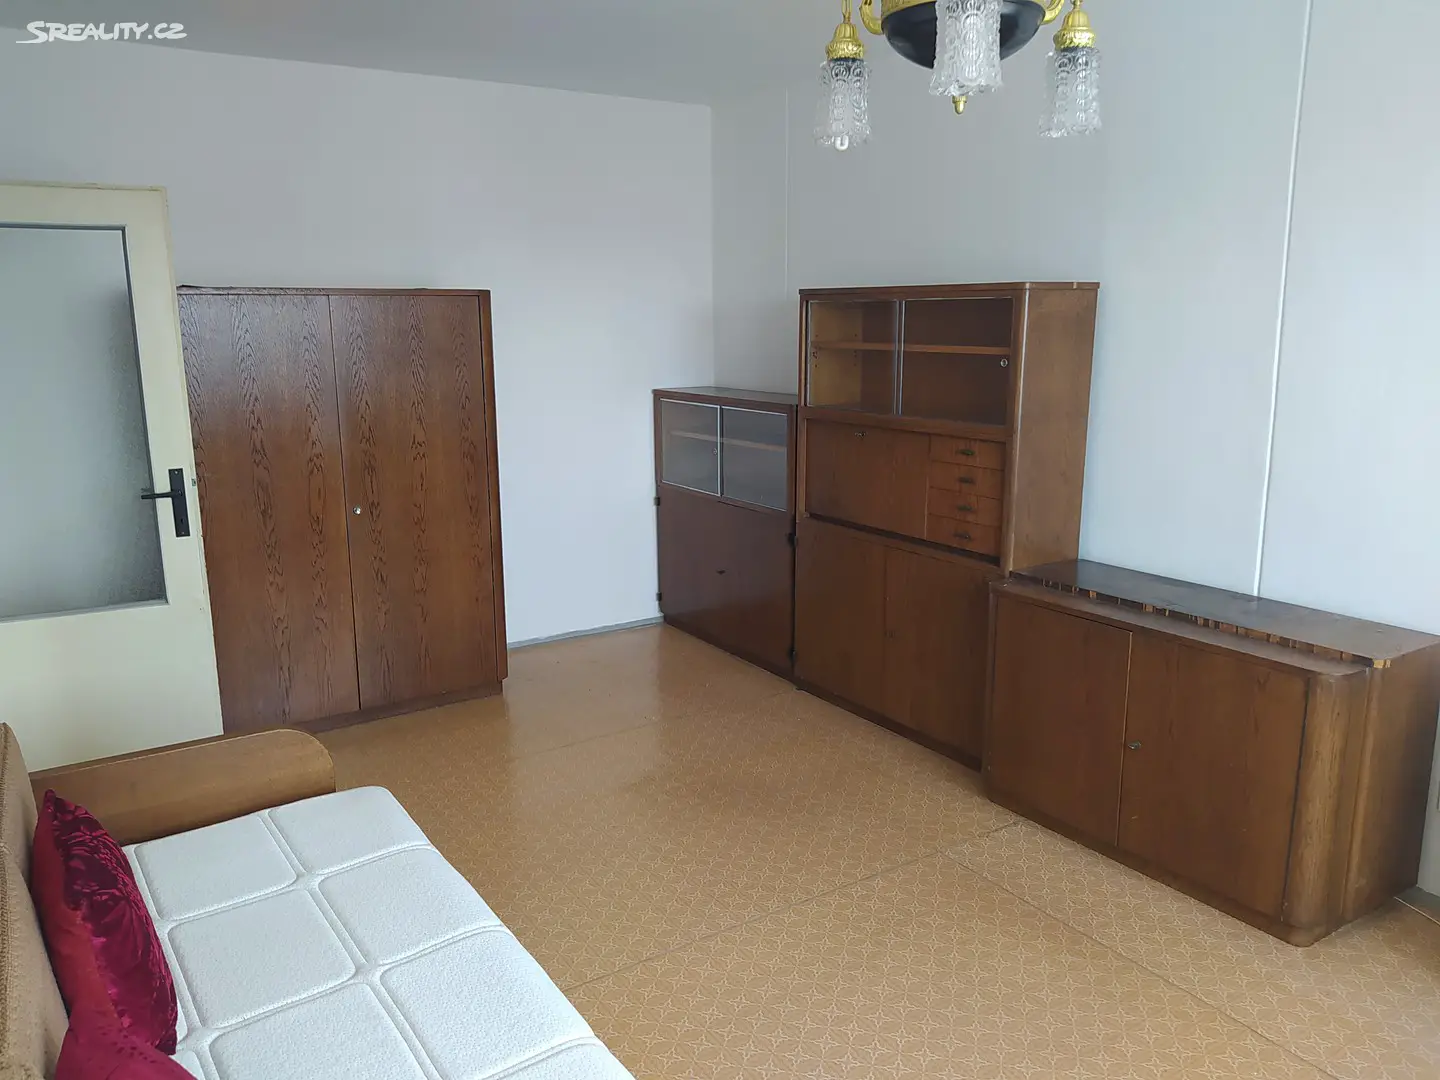 Pronájem bytu 1+1 40 m², Pardubice - Studánka, okres Pardubice